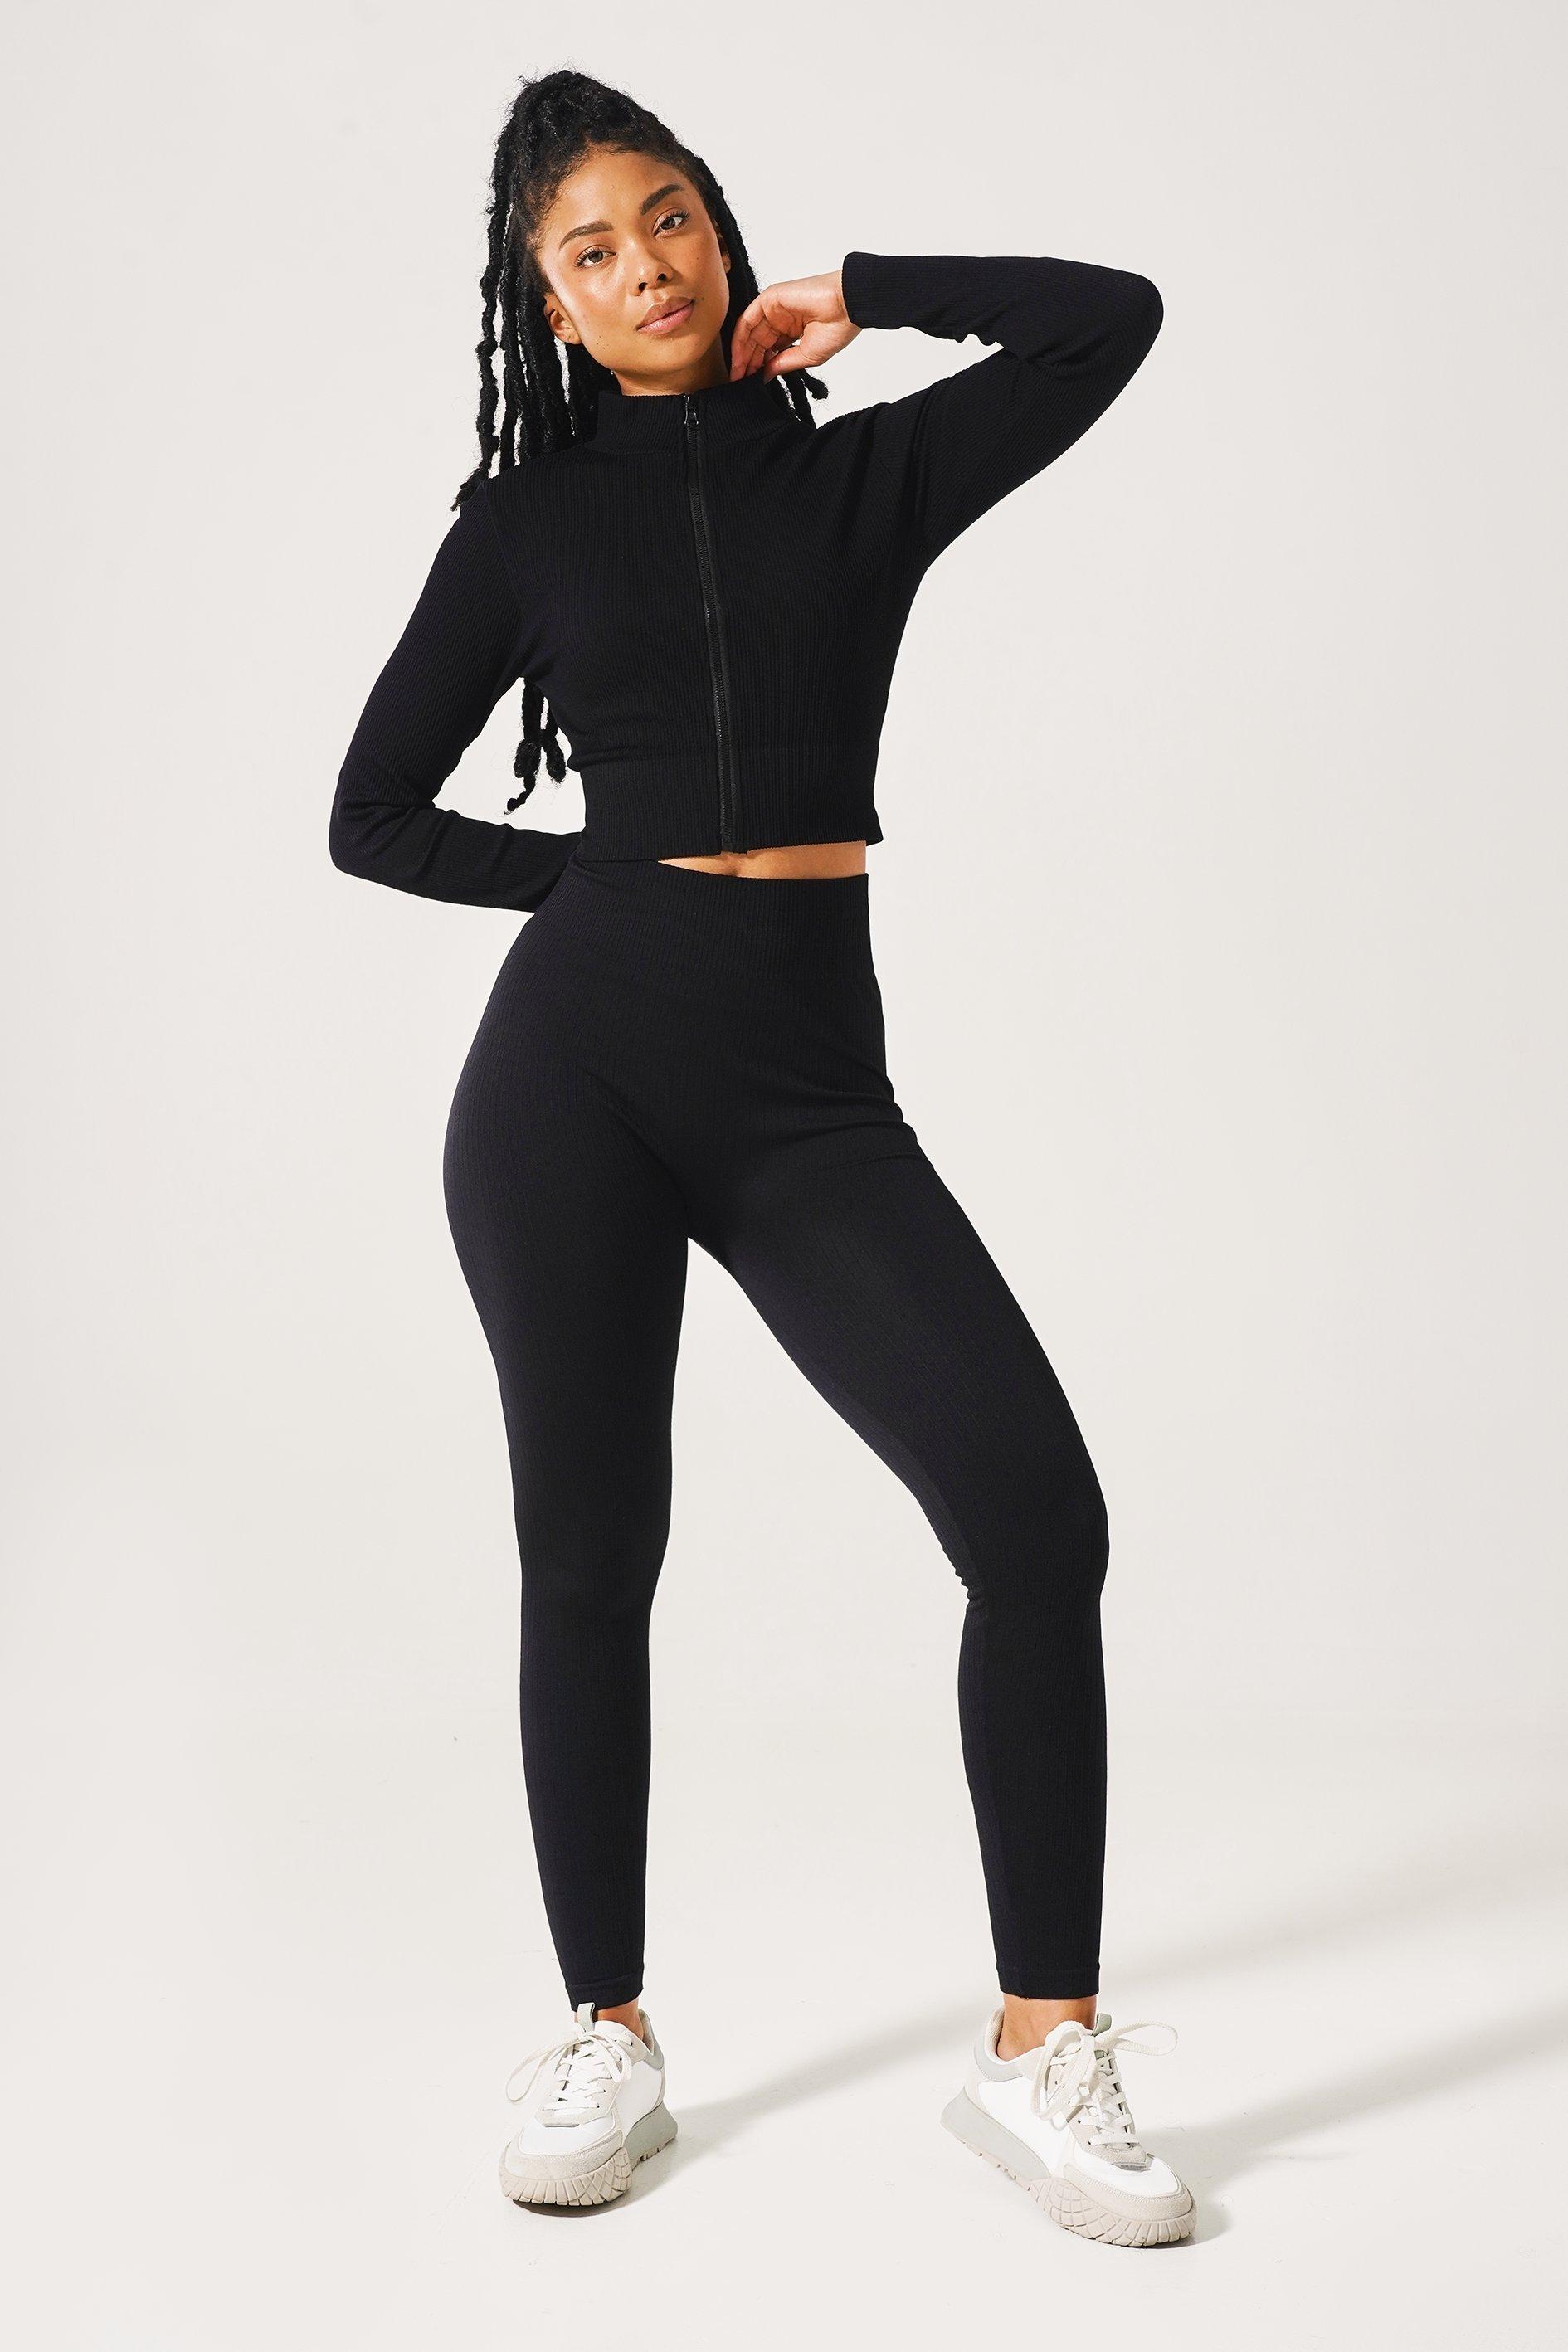 Women Warm Long Sleeve Gym Yoga Top Shirt Winter Zipper Sports Top Fitness  Jacket Thermal Underwear Shirts Woman Sport Clothing